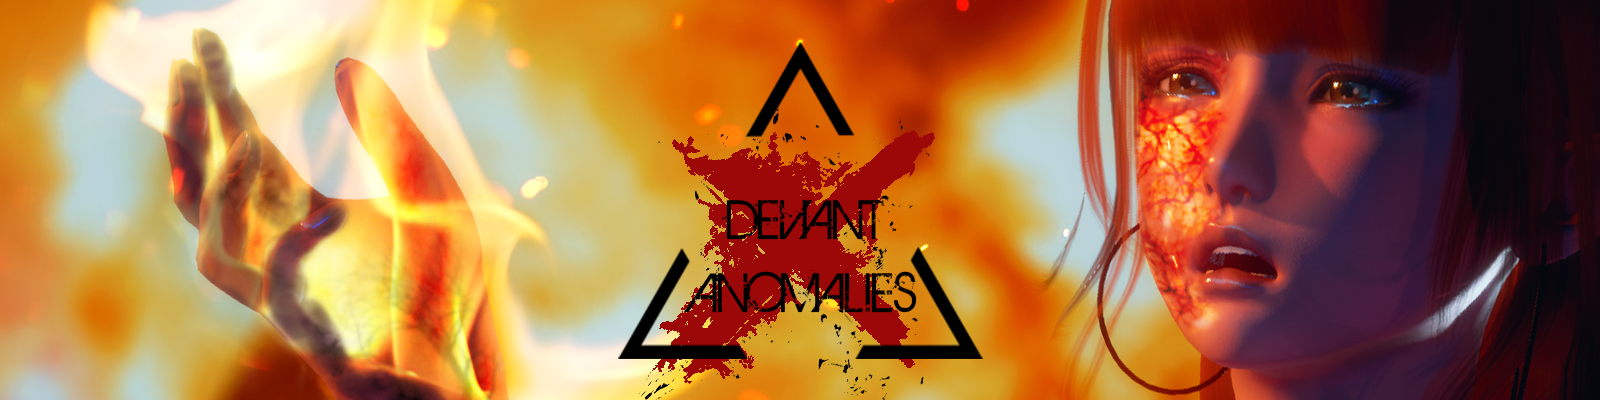 Deviant Anomalies poster